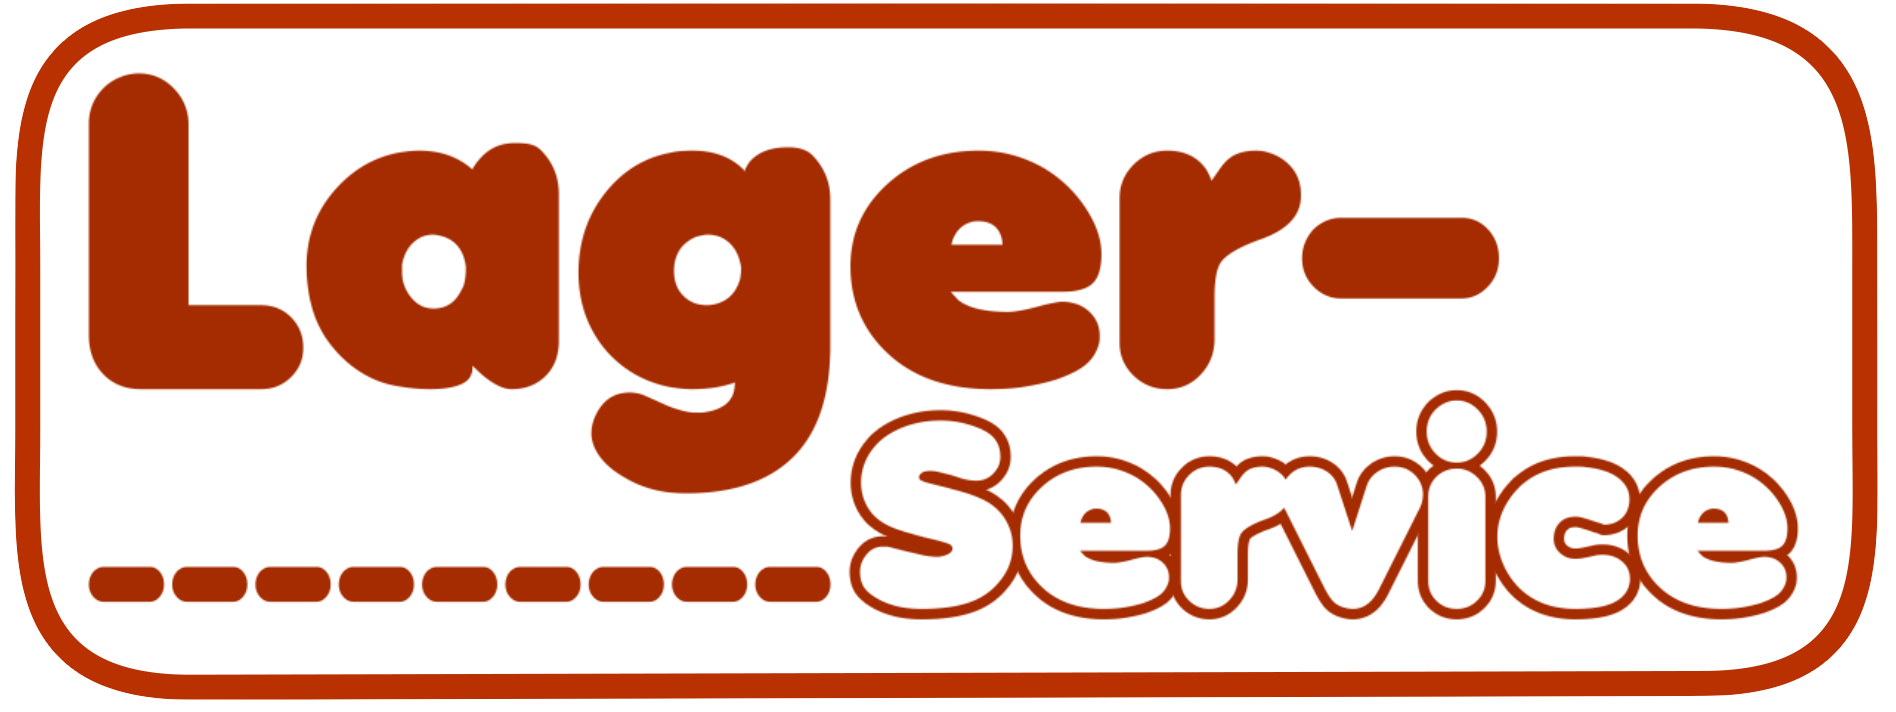 lager-service-symbol